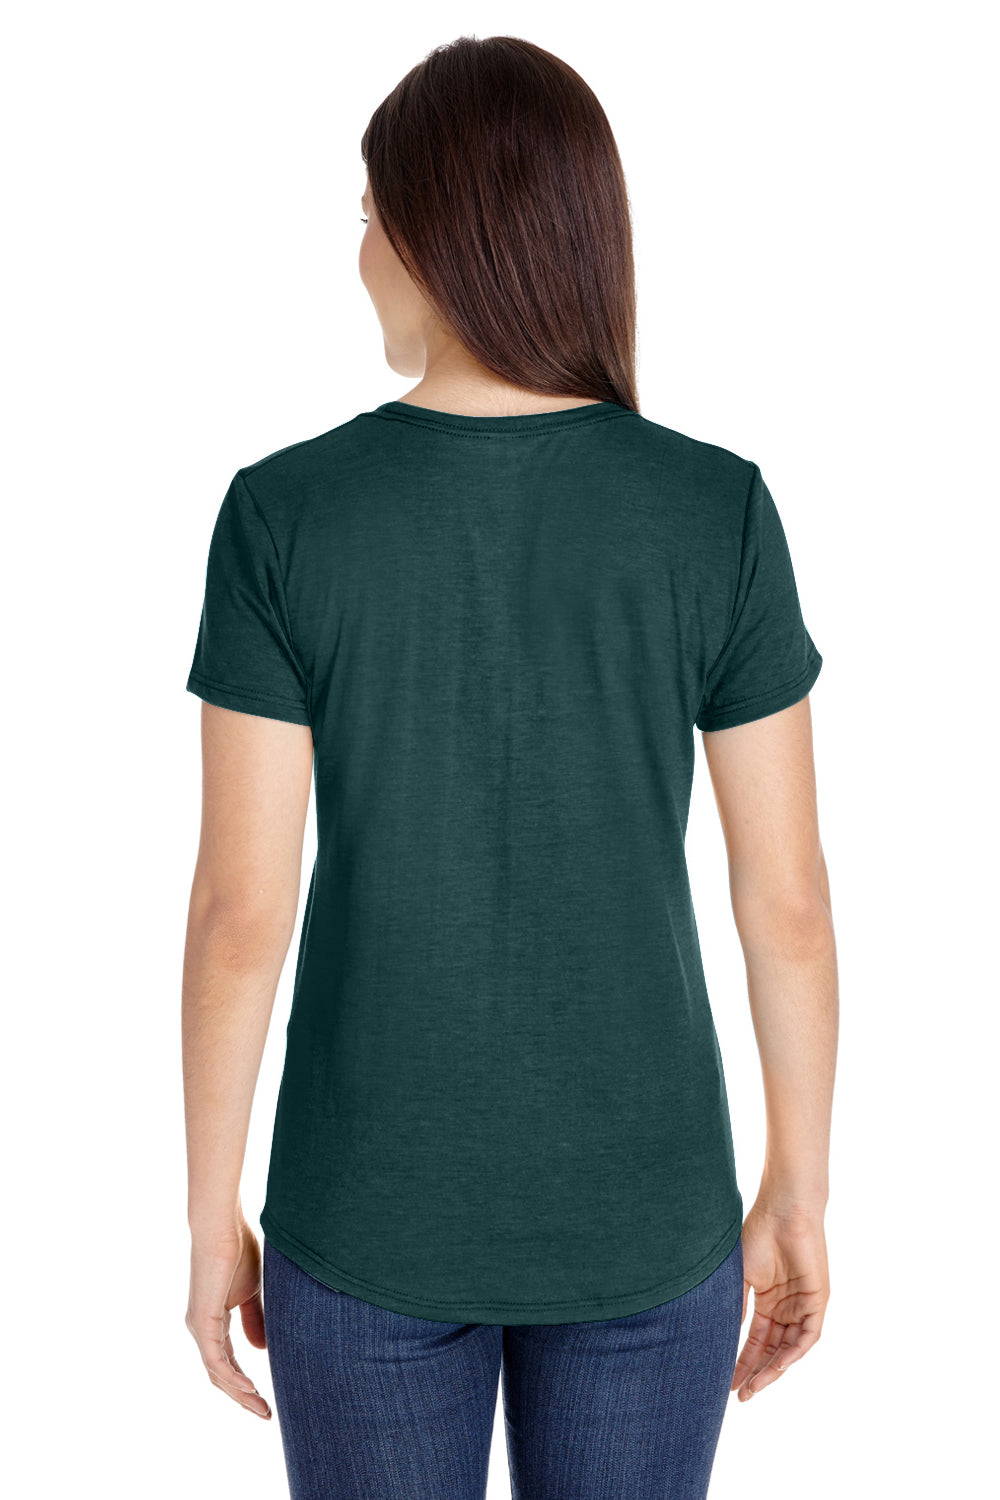 Anvil 6750L Womens Short Sleeve Crewneck T-Shirt Heather Dark Green Back